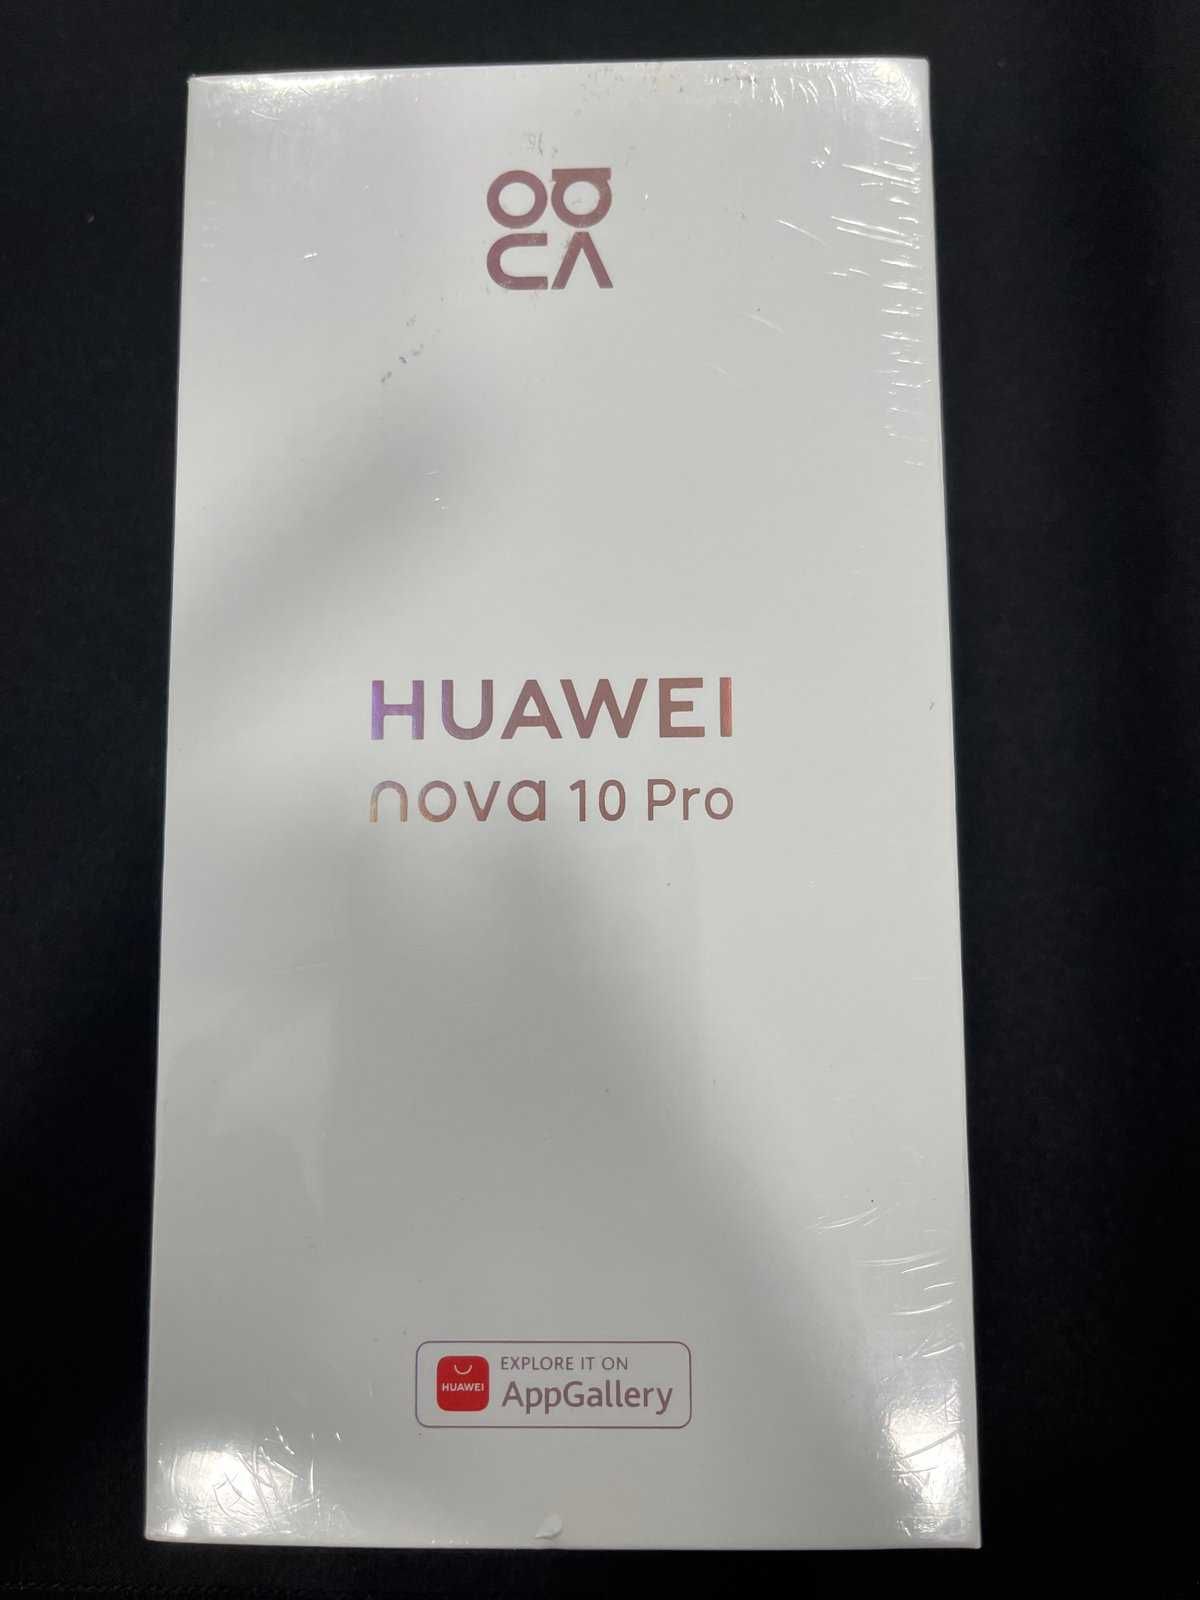 Huawei Nova 10 Pro 256GB Starry Silver ID-umy927